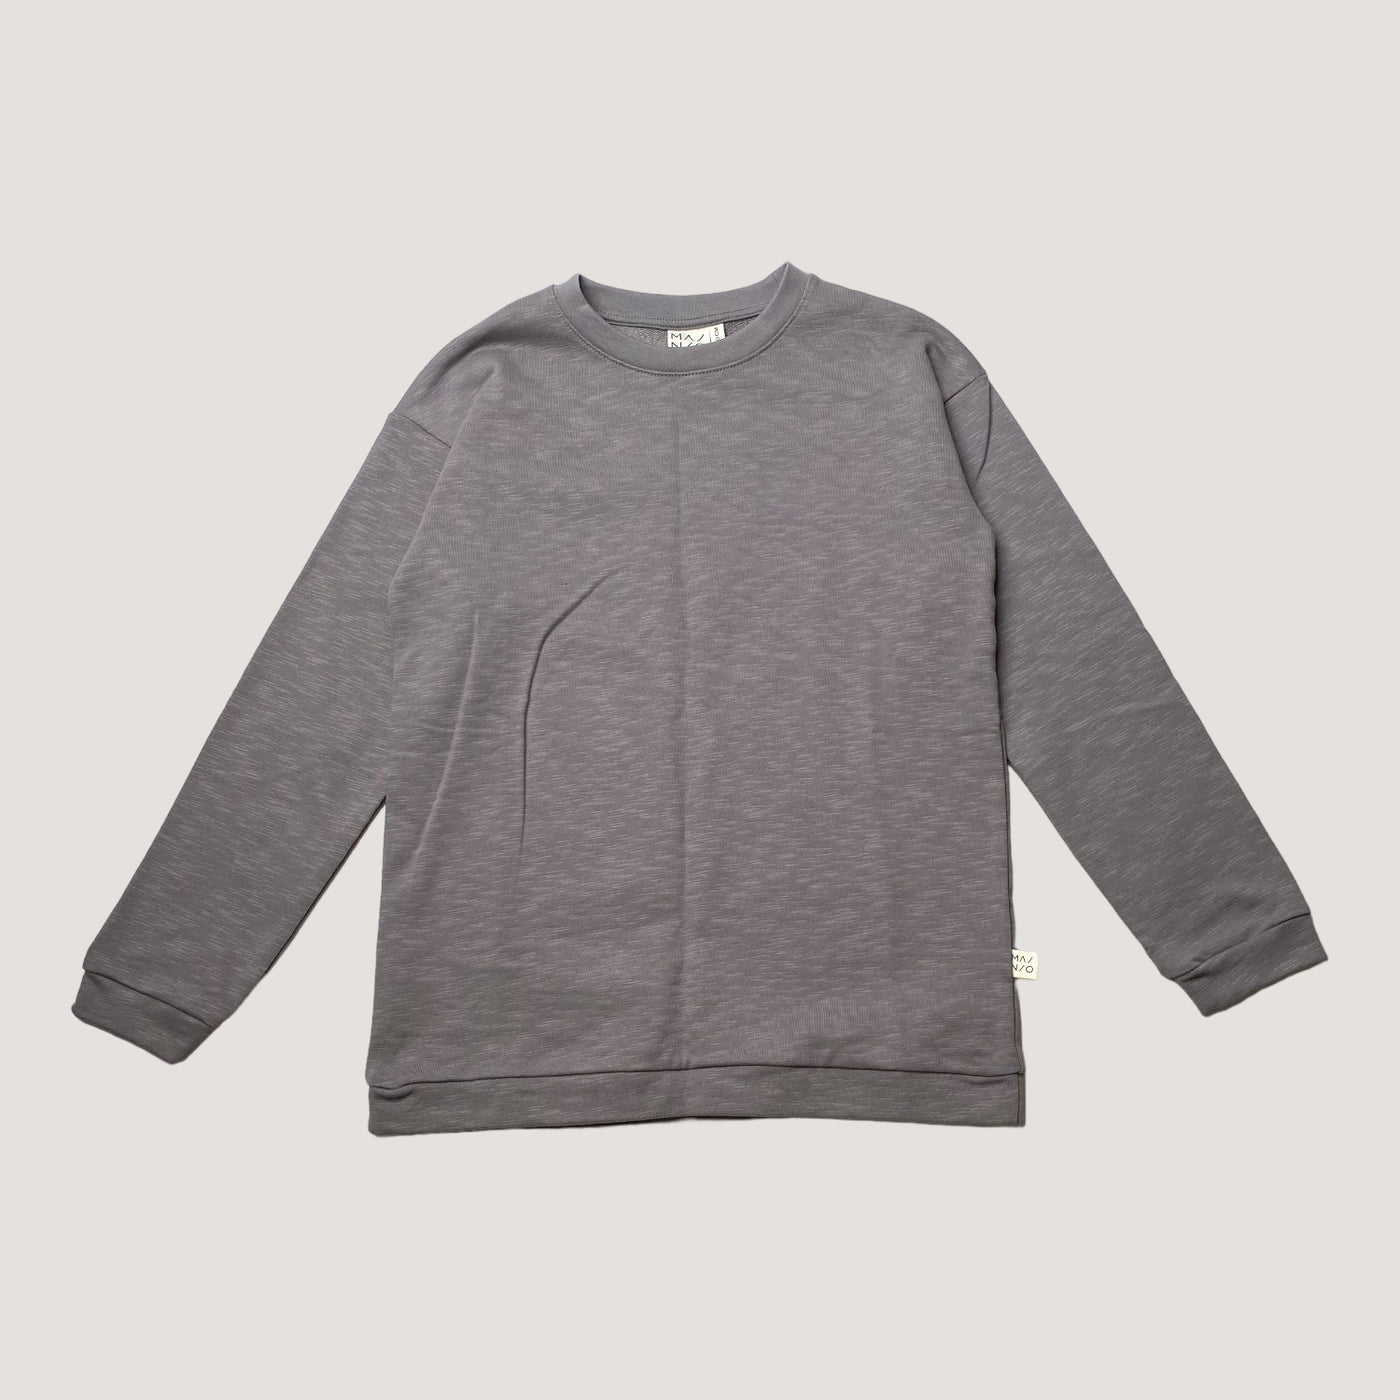 Mainio sweatshirt, grey | 134/140cm